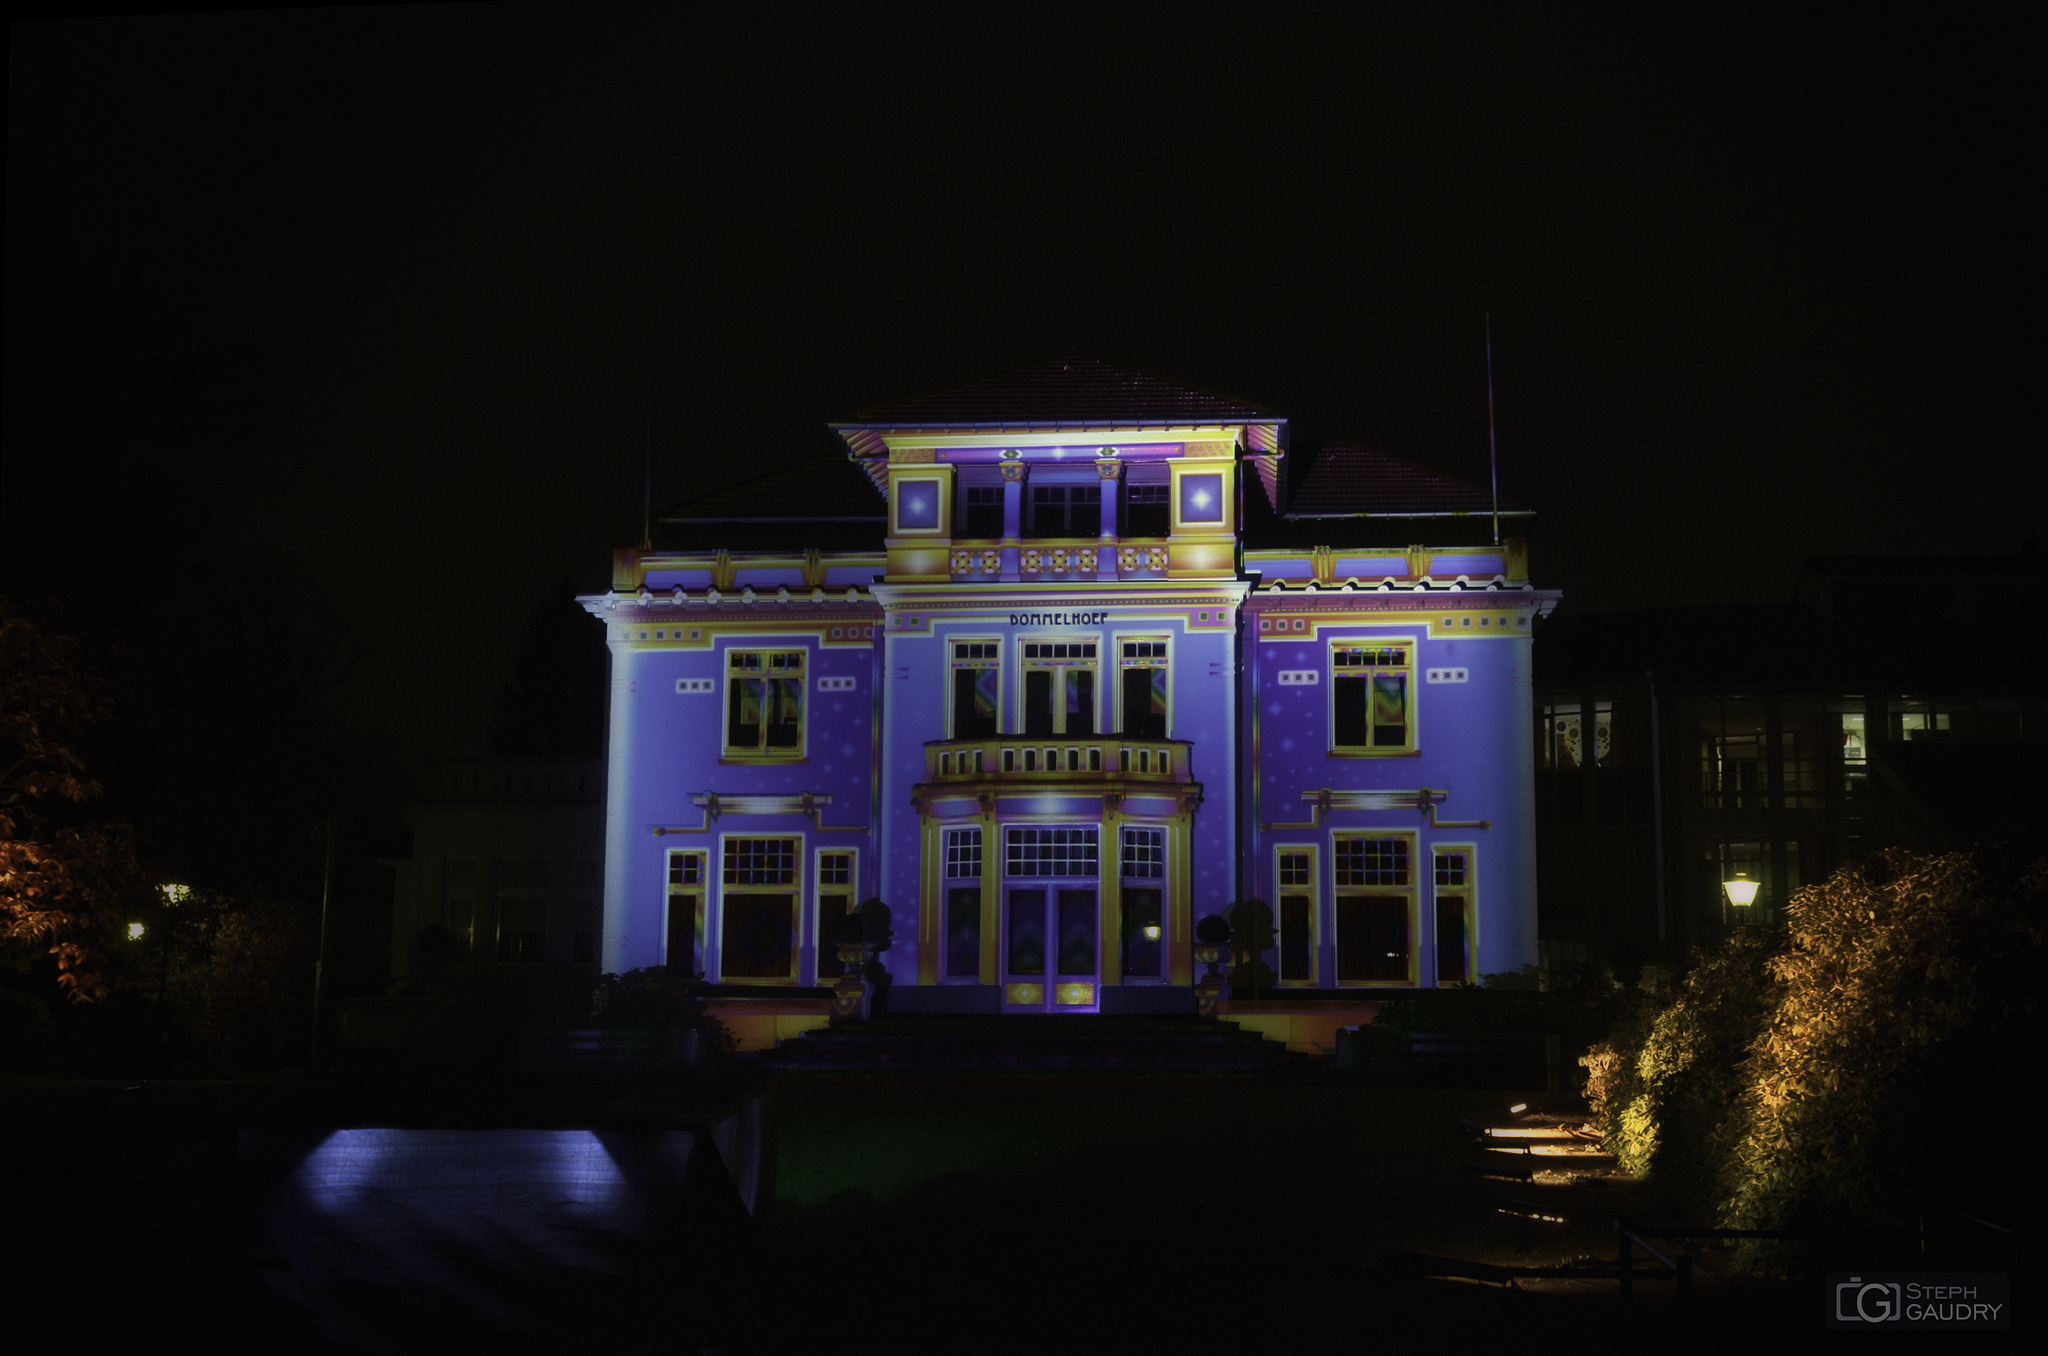 Eindhoven glow 2013 - CHROMOLITHE (v1) [Klik om de diavoorstelling te starten]